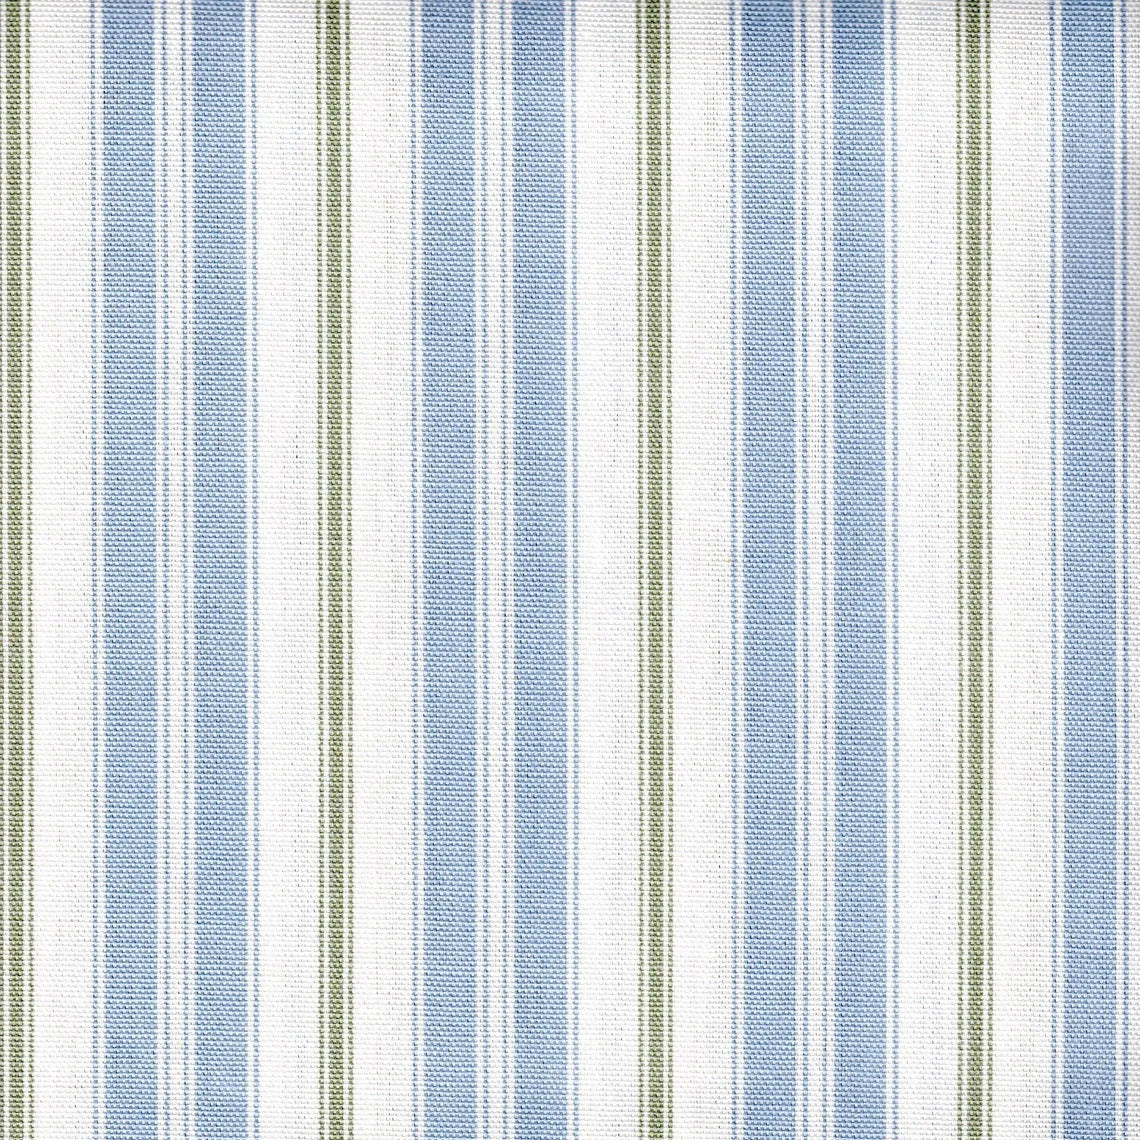 pillow sham in newbury antique blue stripe- blue, green, white